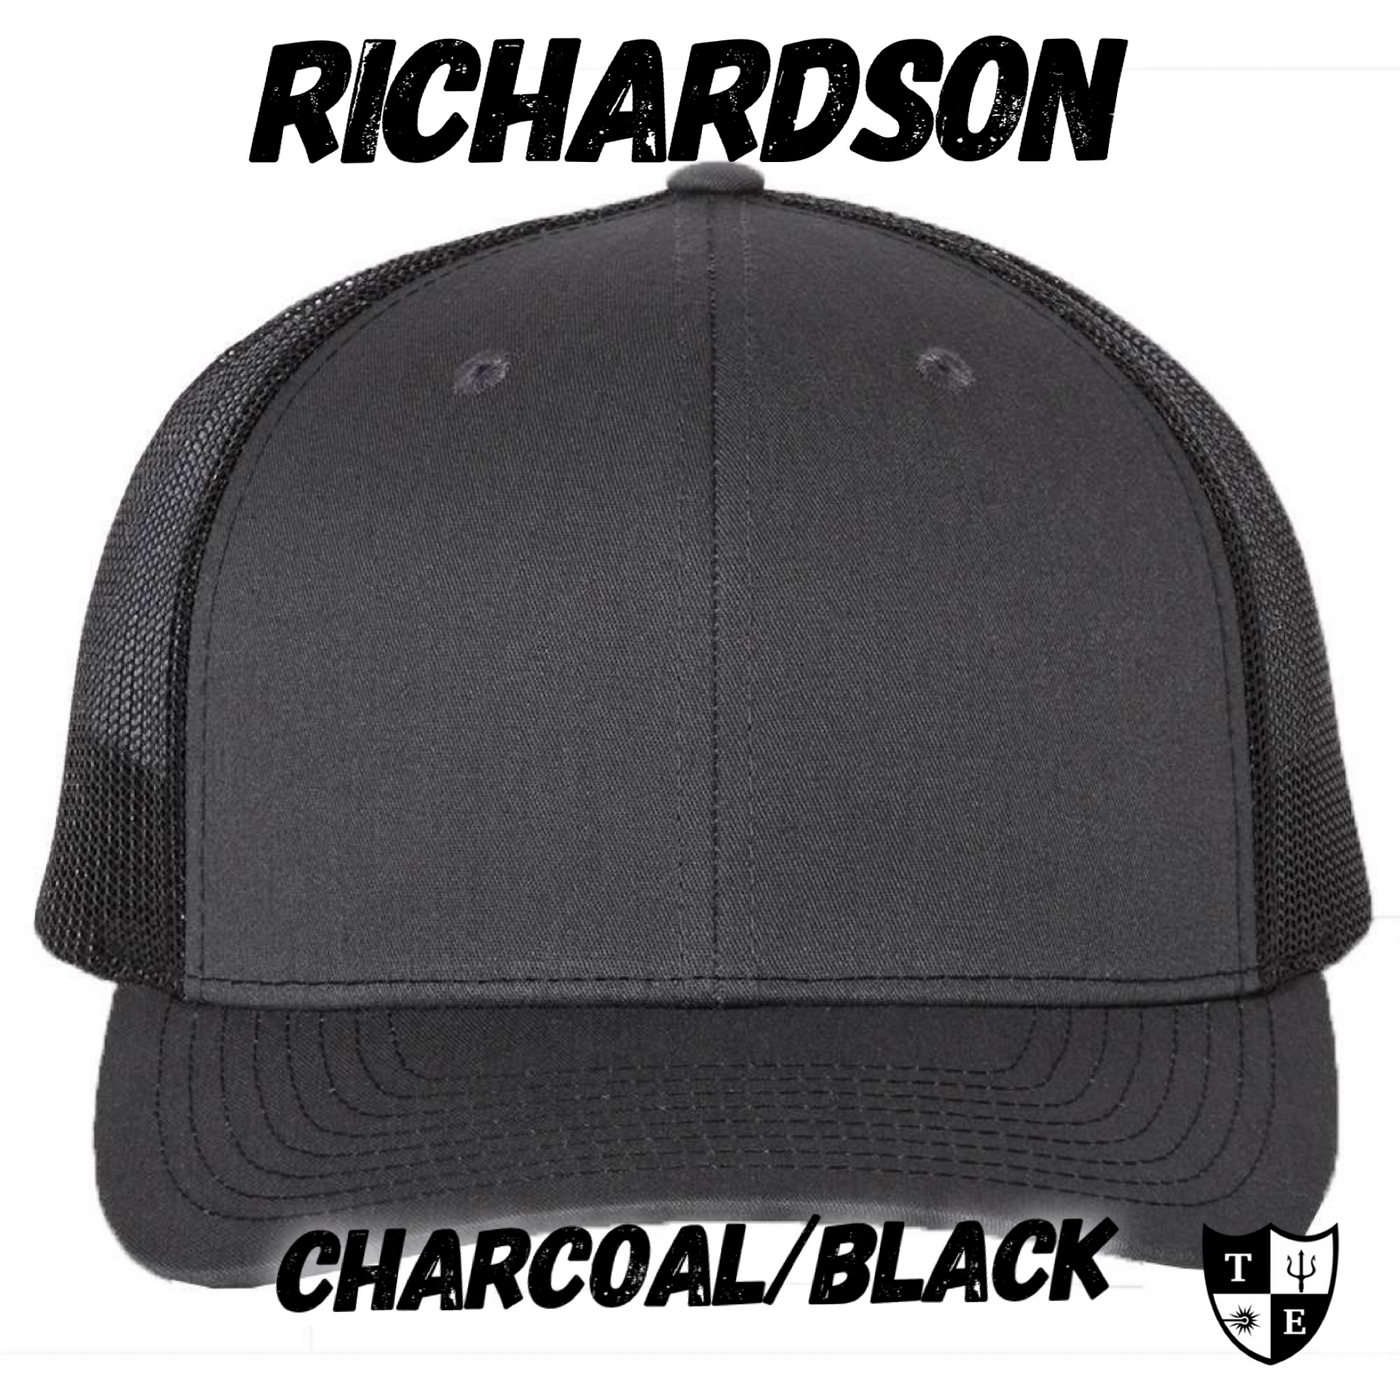 Brotallion Richardson Charcoal Black